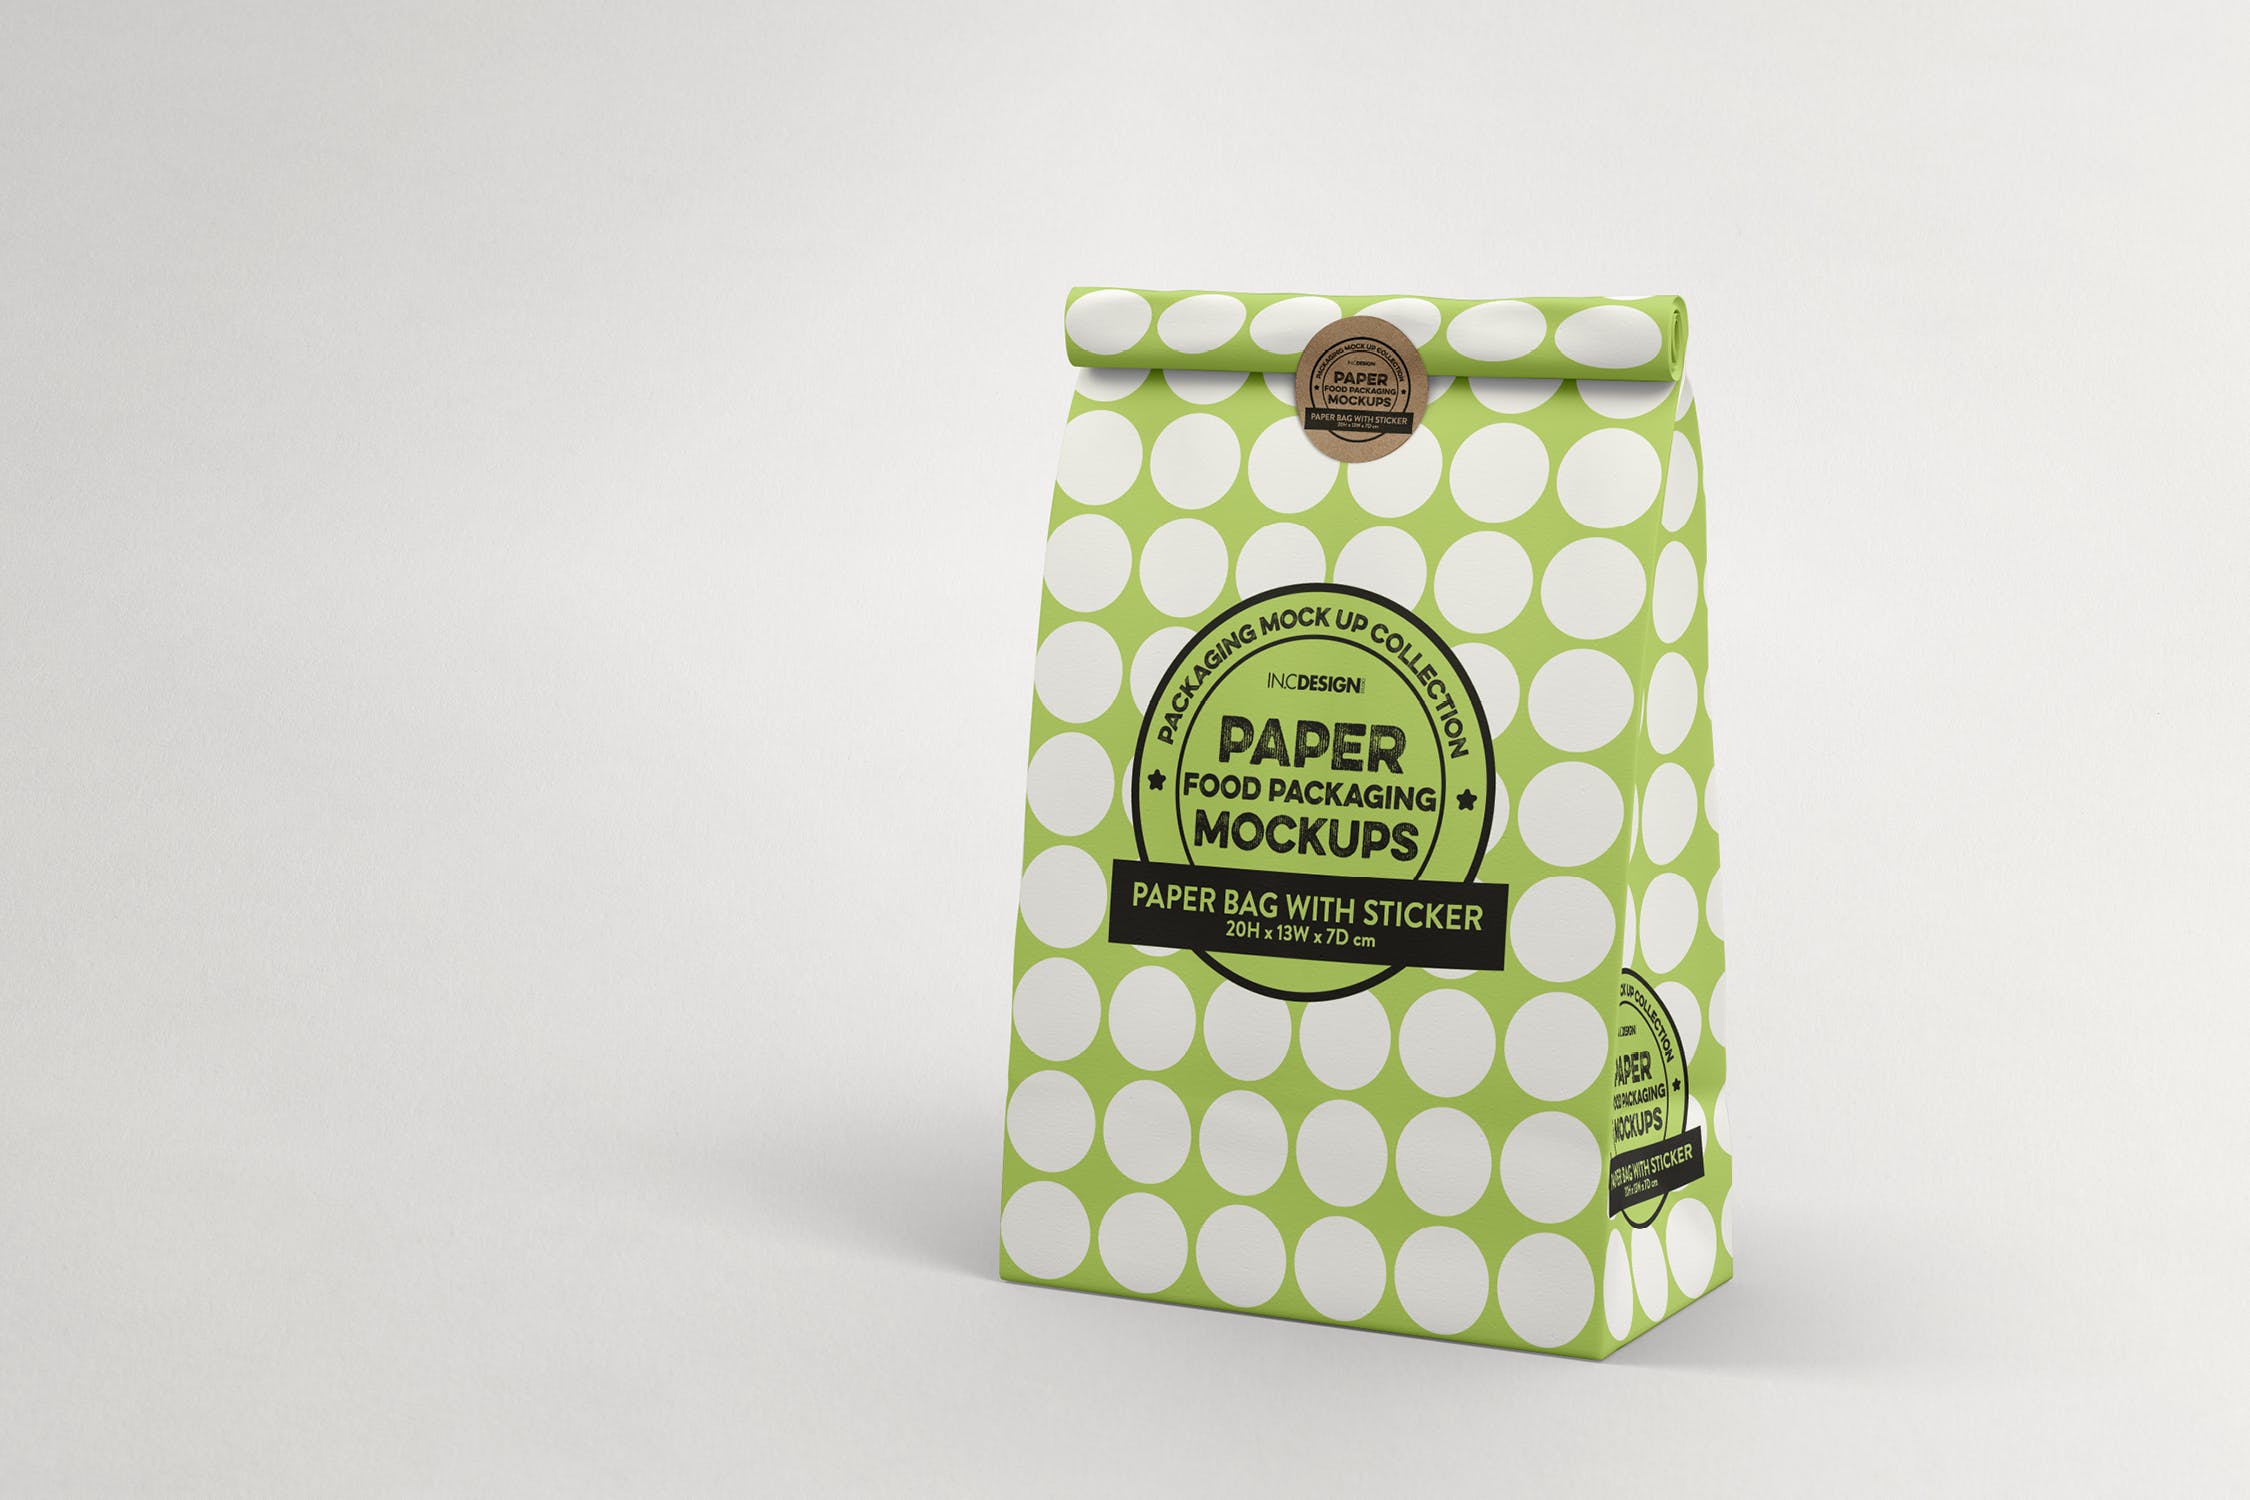 贴纸密封包装纸袋设计效果图素材库精选 Paper Bag with sticker Seal Packaging Mockup插图(2)